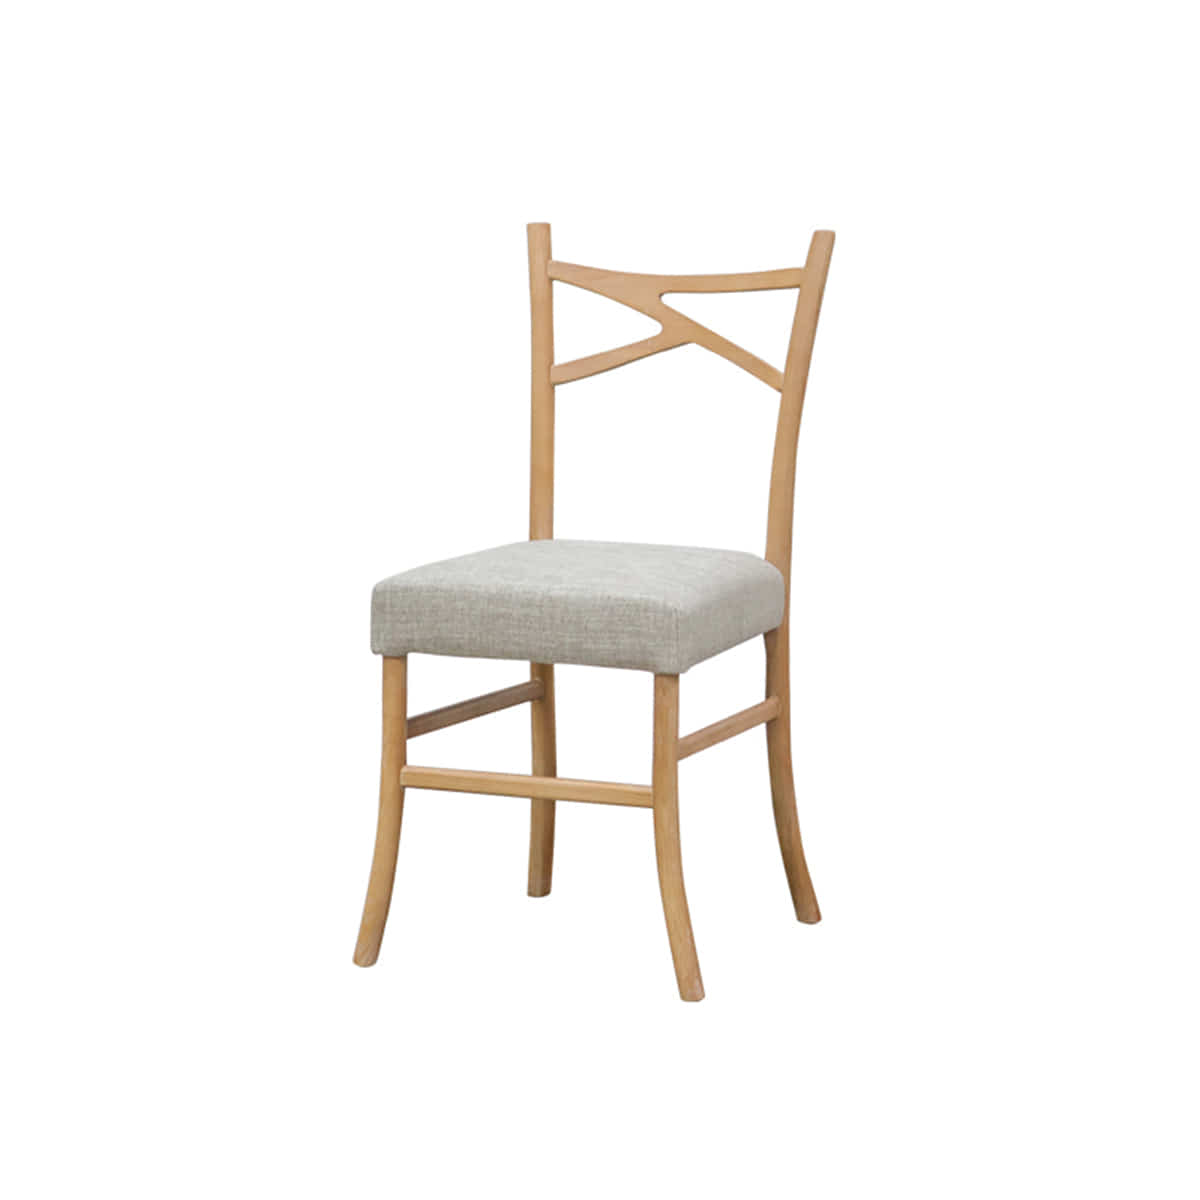 Zacc collection by SEDEC Deer Natural Dining Chair 디어 내추럴 식탁 의자 - A207 (내추럴)